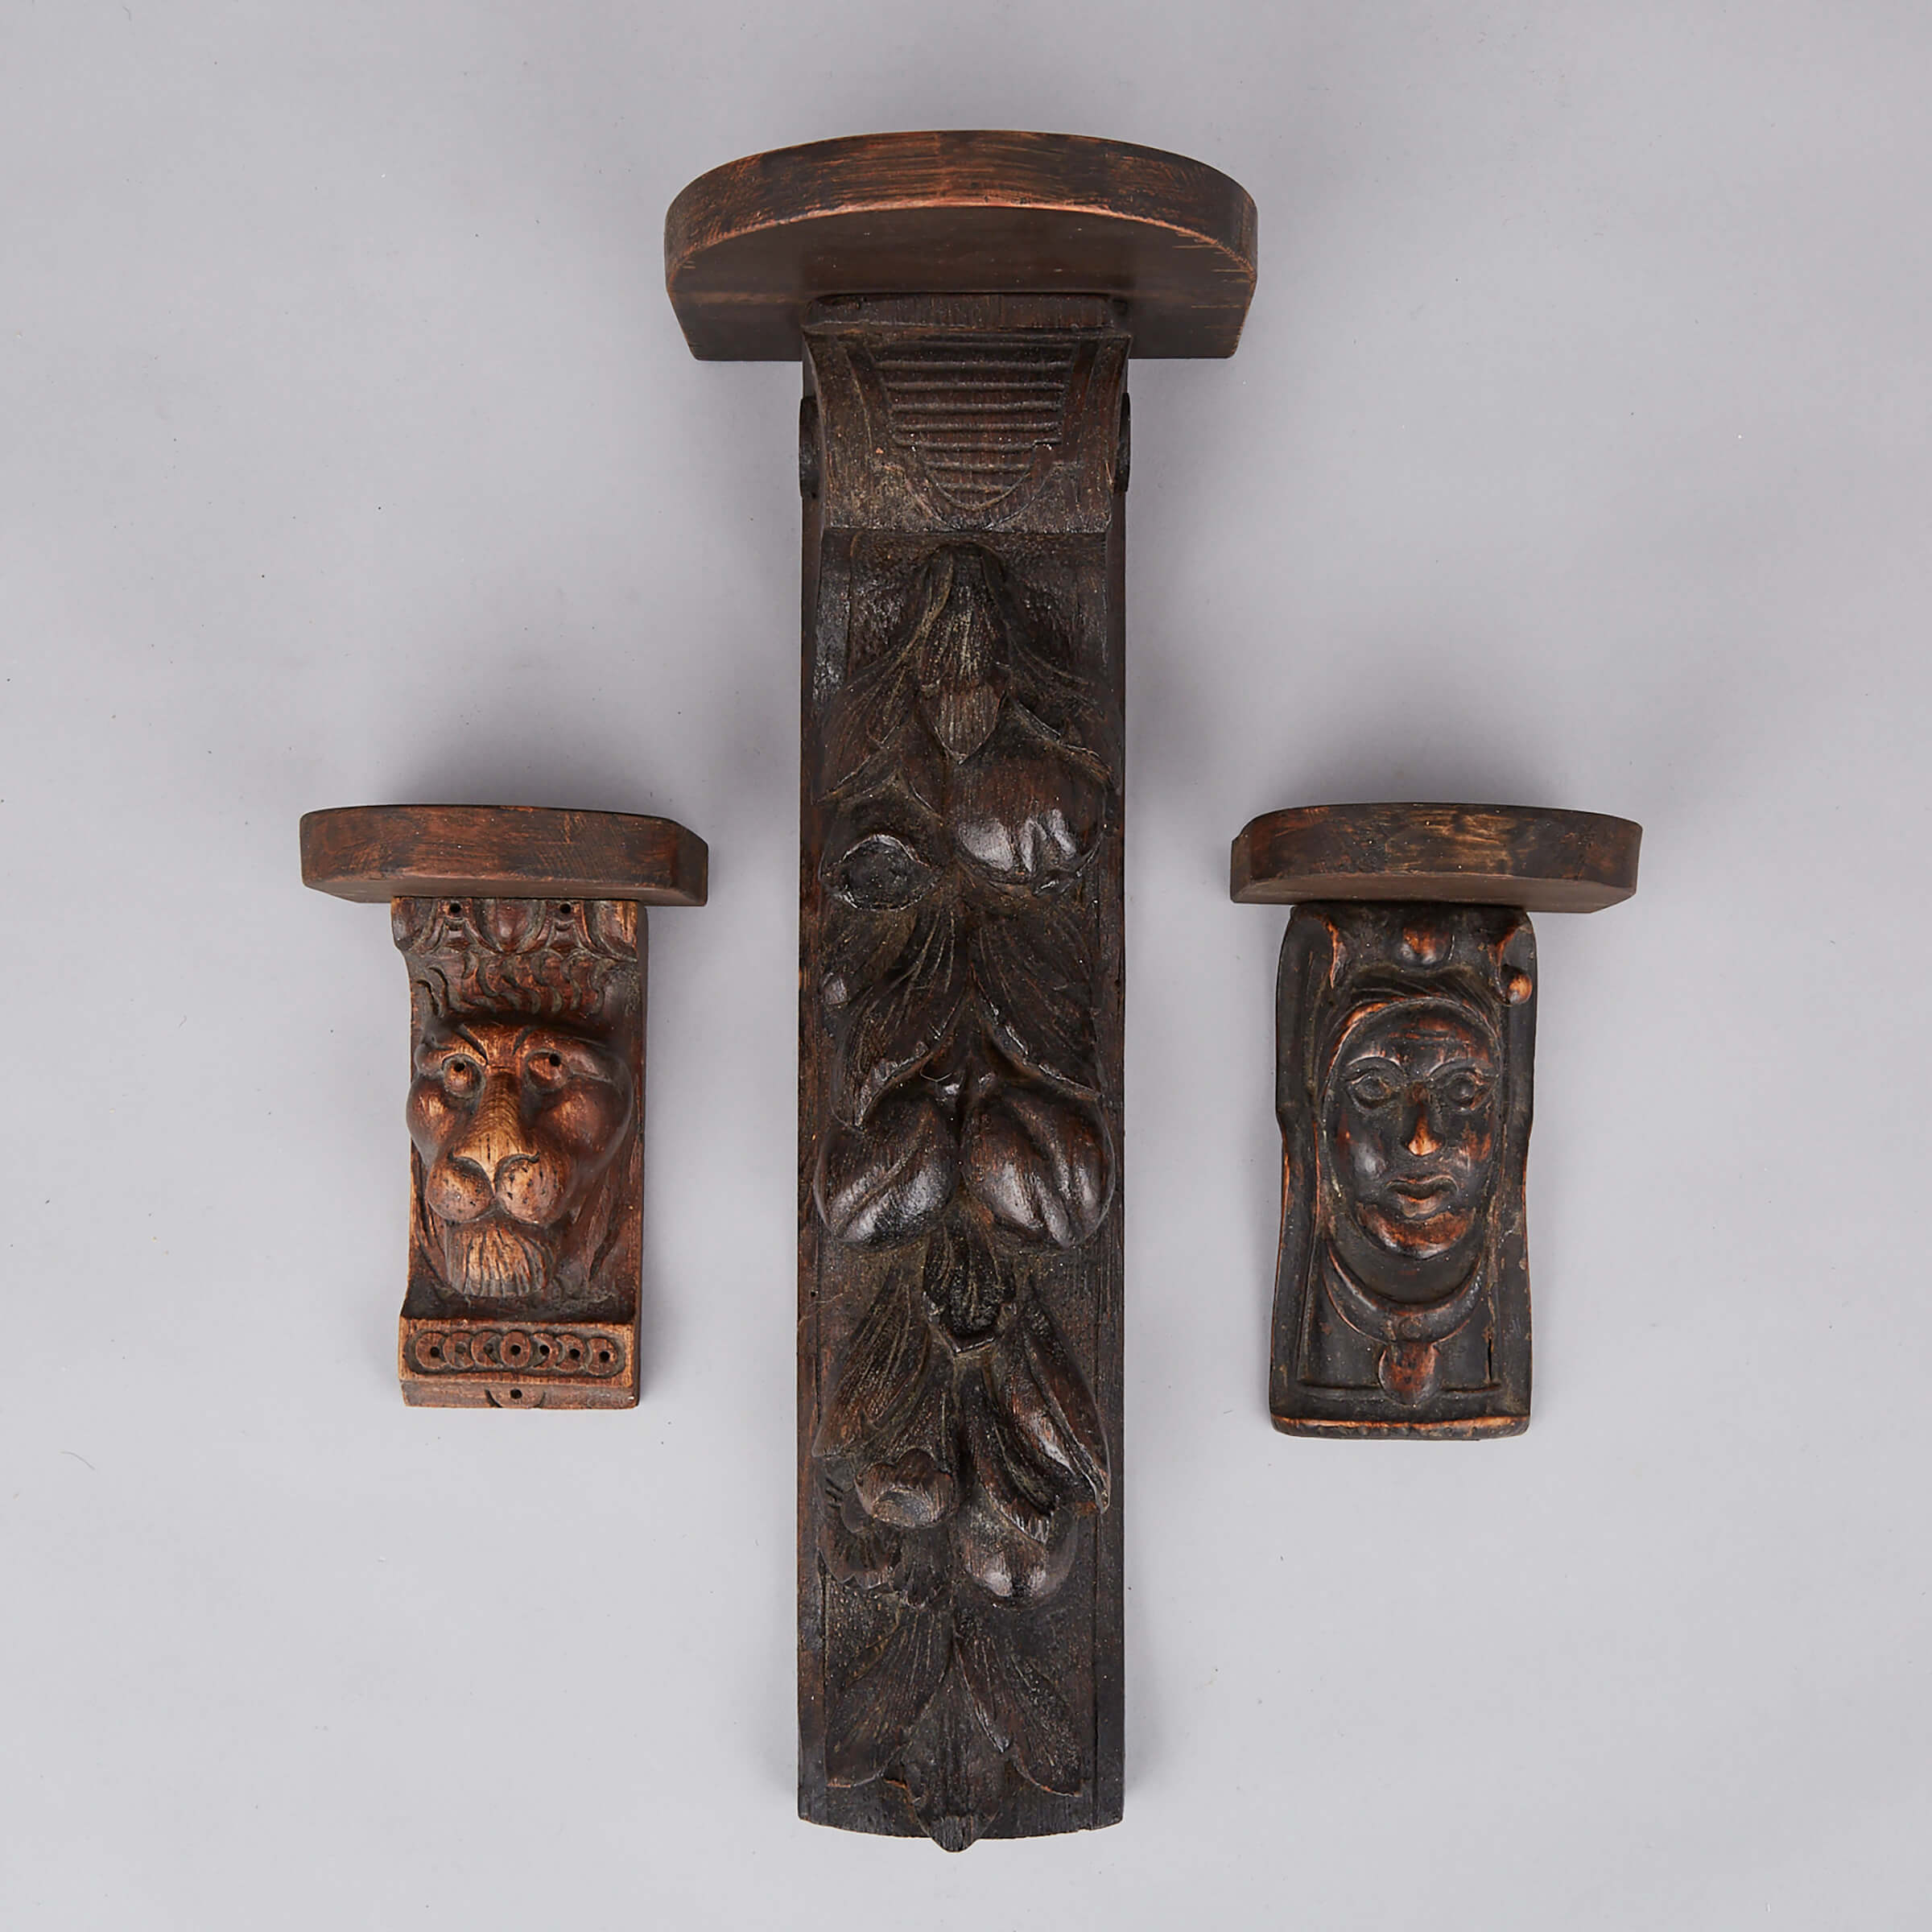 Three English Carved Oak Corbels, 17th century